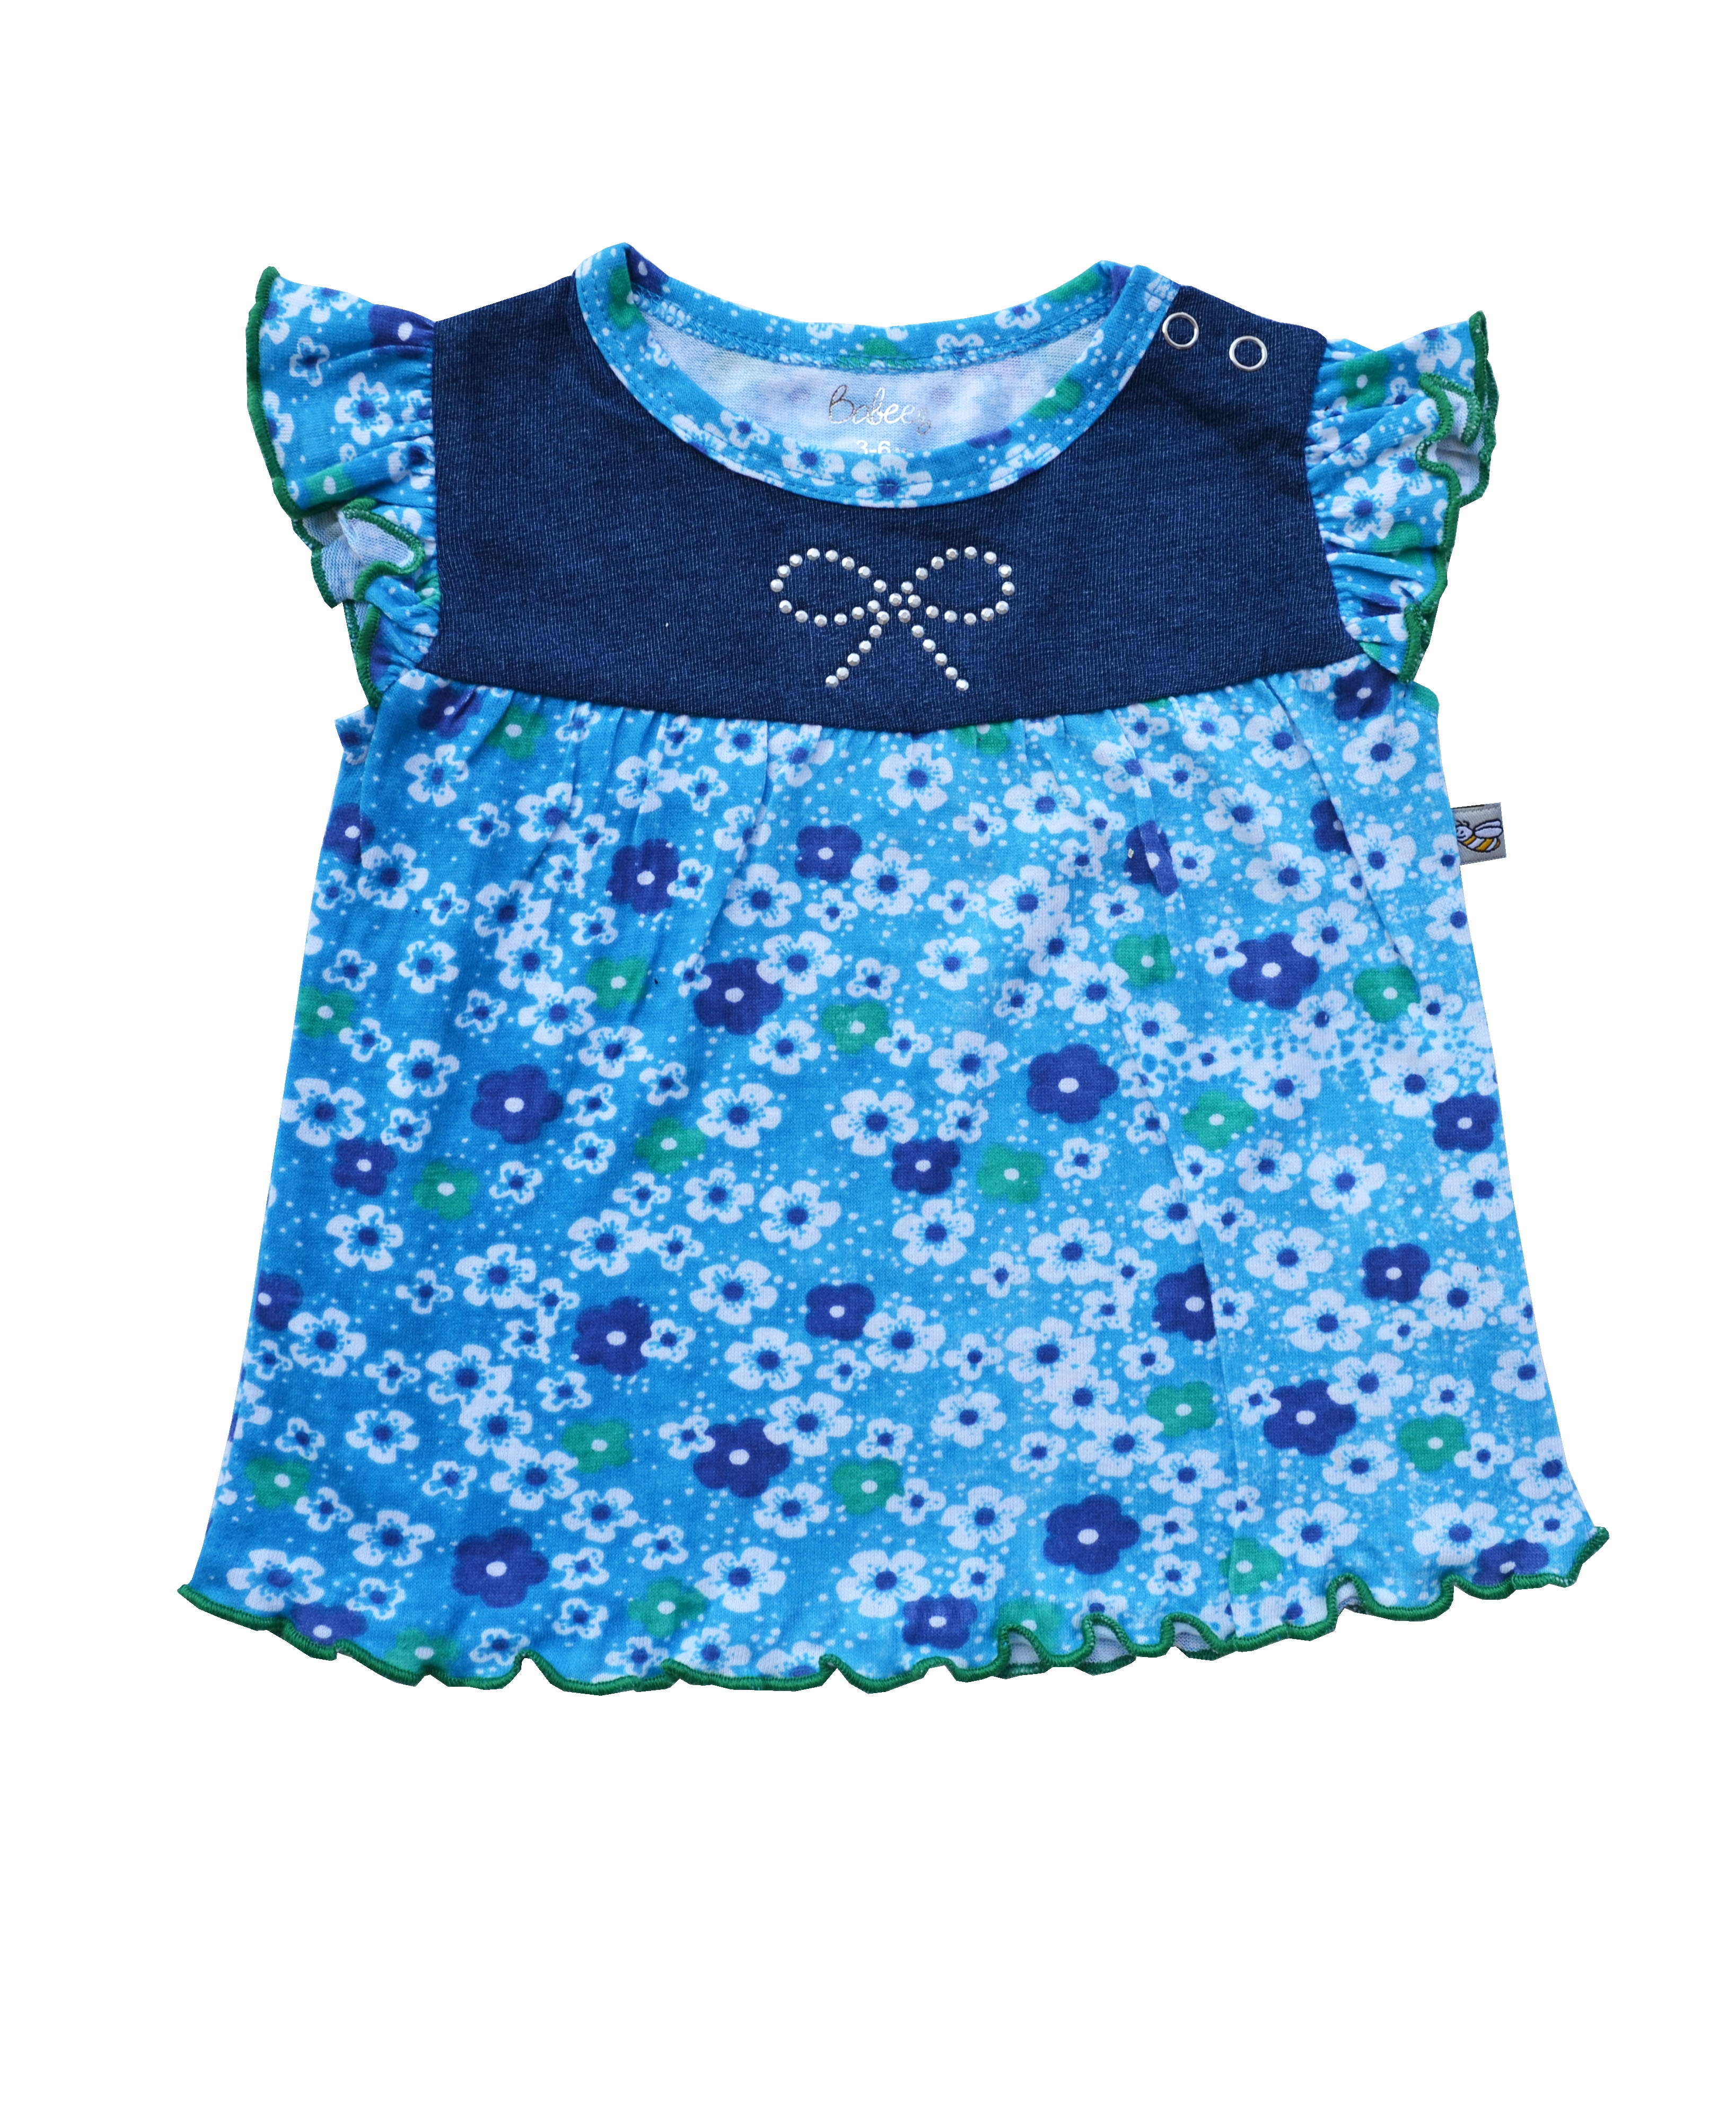 Babeez | Allover Flower Print on Blue Top (100% Cotton Jersey) undefined